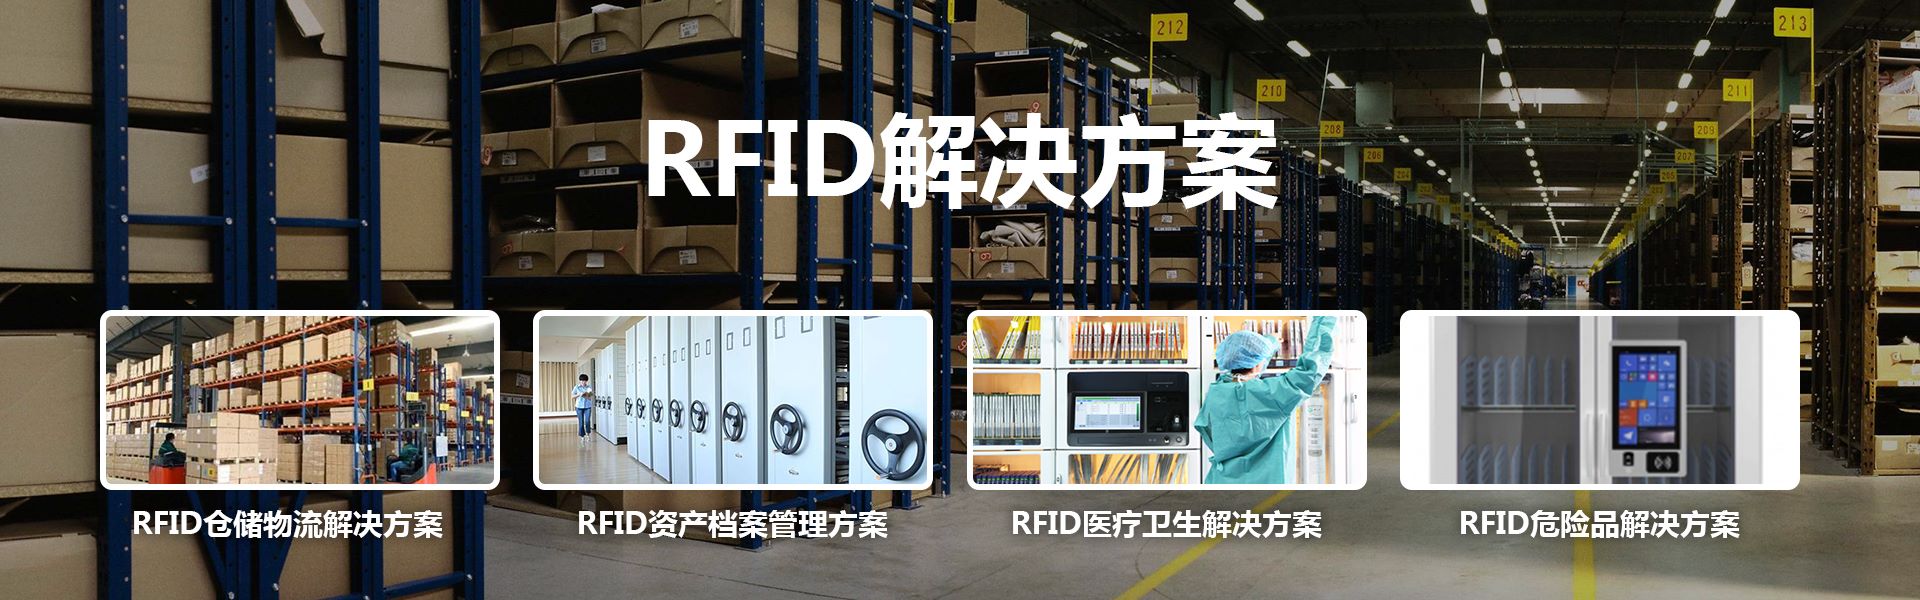 RFID智能仓储